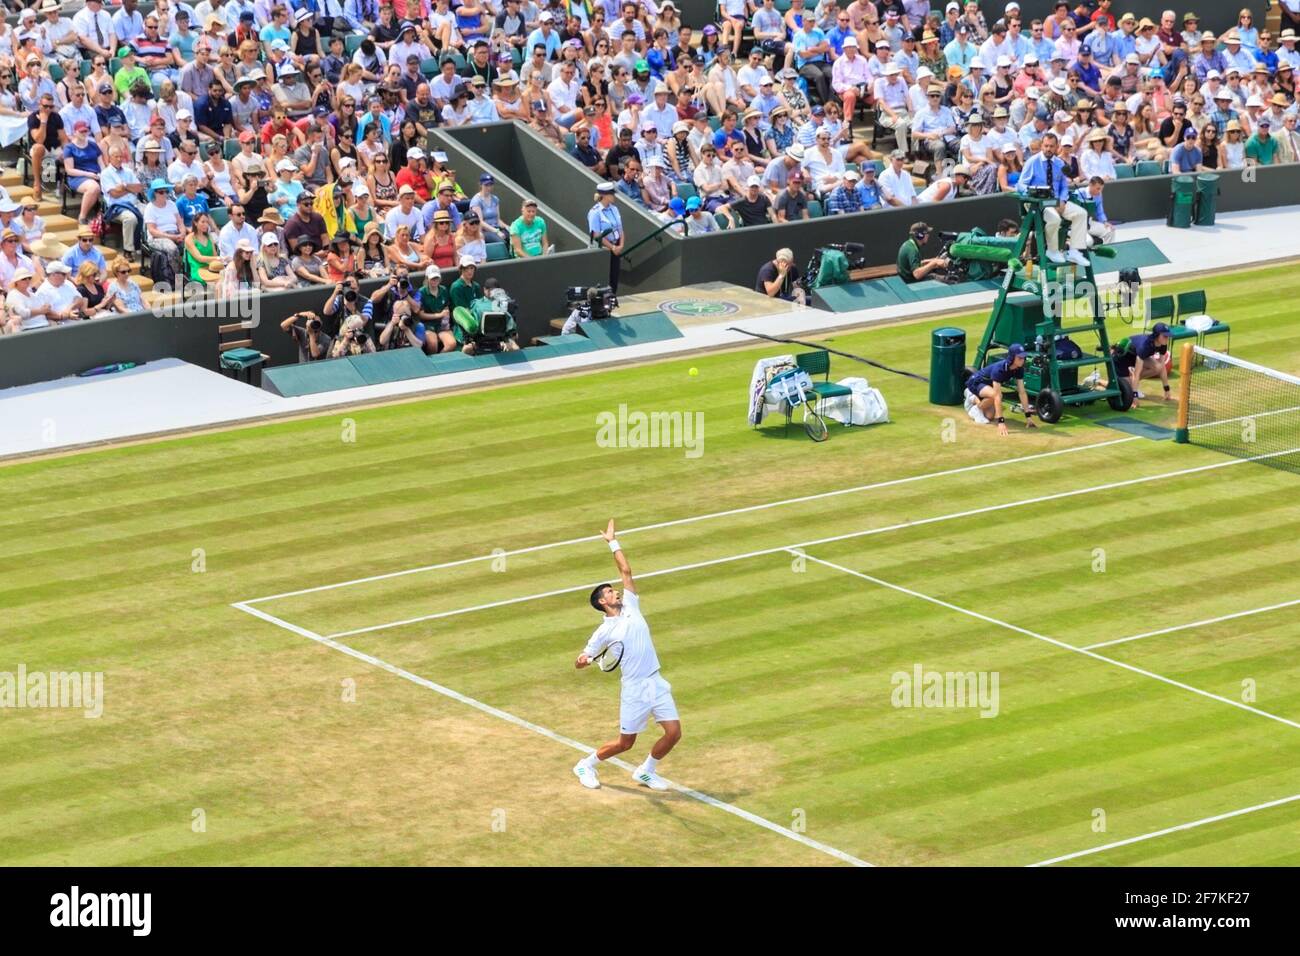 Campo No 1 folle, la gente guarda una partita come Novac Djokovic serve, Wimbledon Tennis Championships 2017, All England Lawn Tennis and Croquet Club, UK Foto Stock